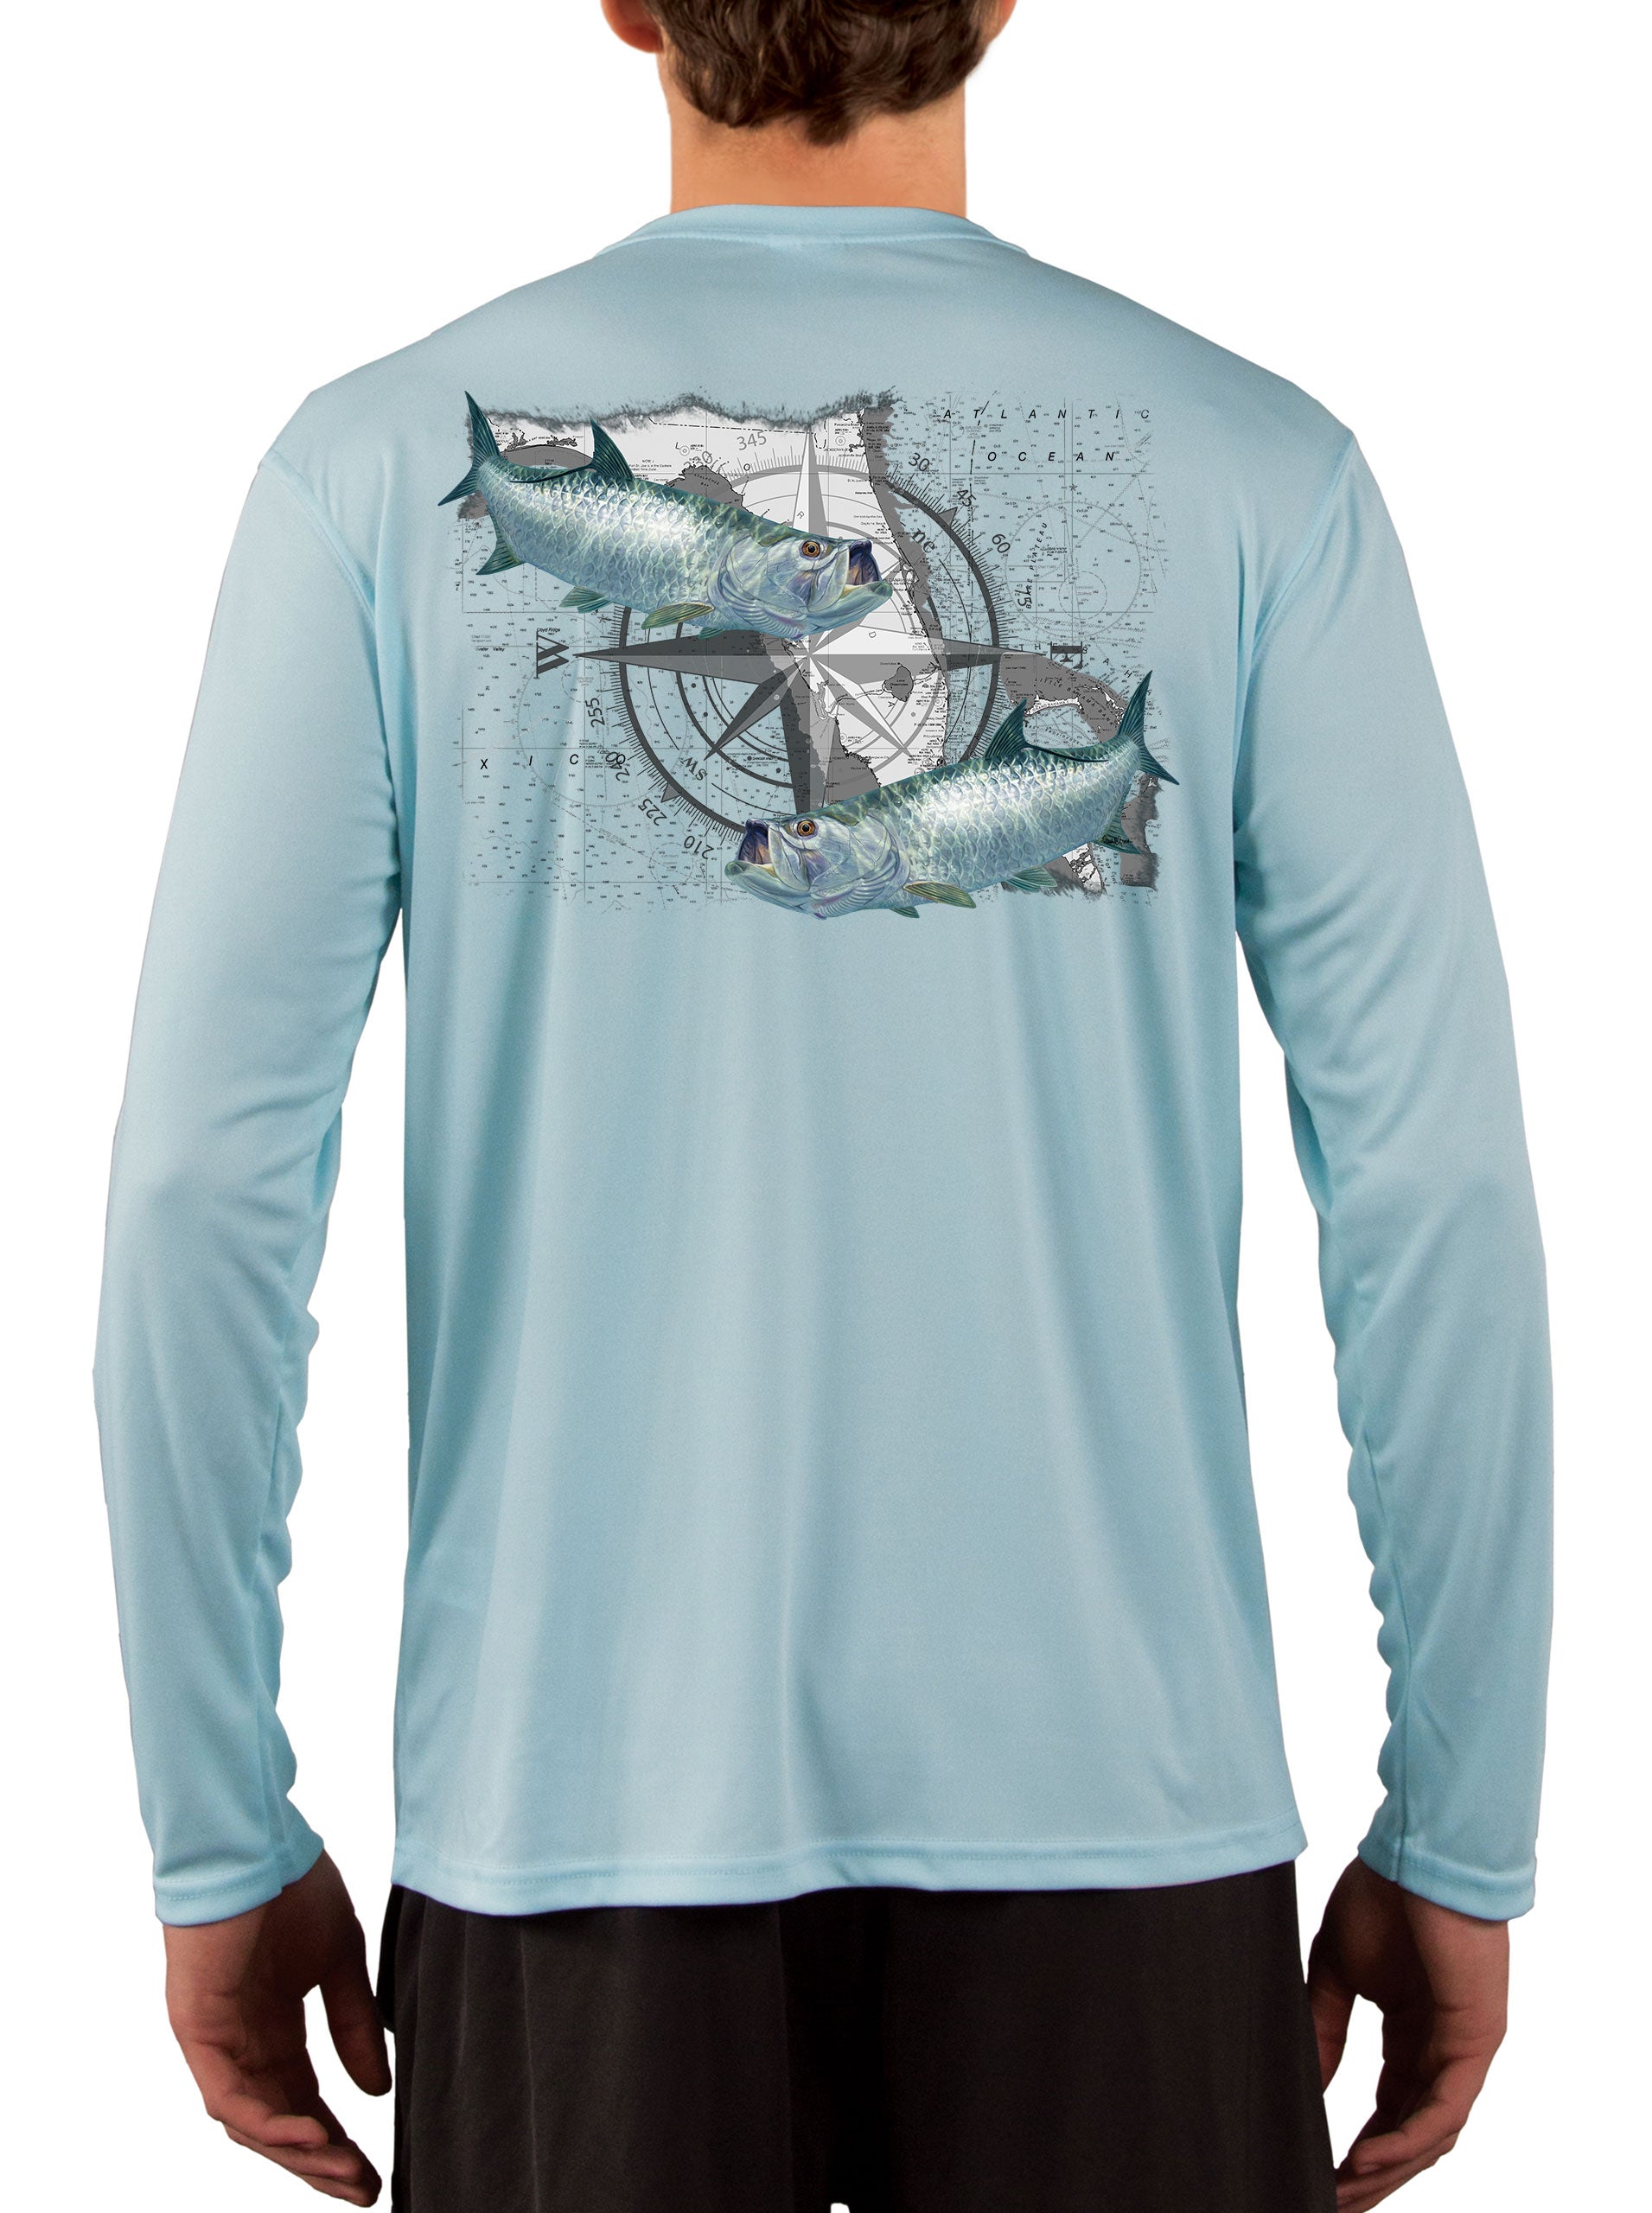 Tarpon Compass Fishing Shirts for Men Florida State Flag – Skiff Life